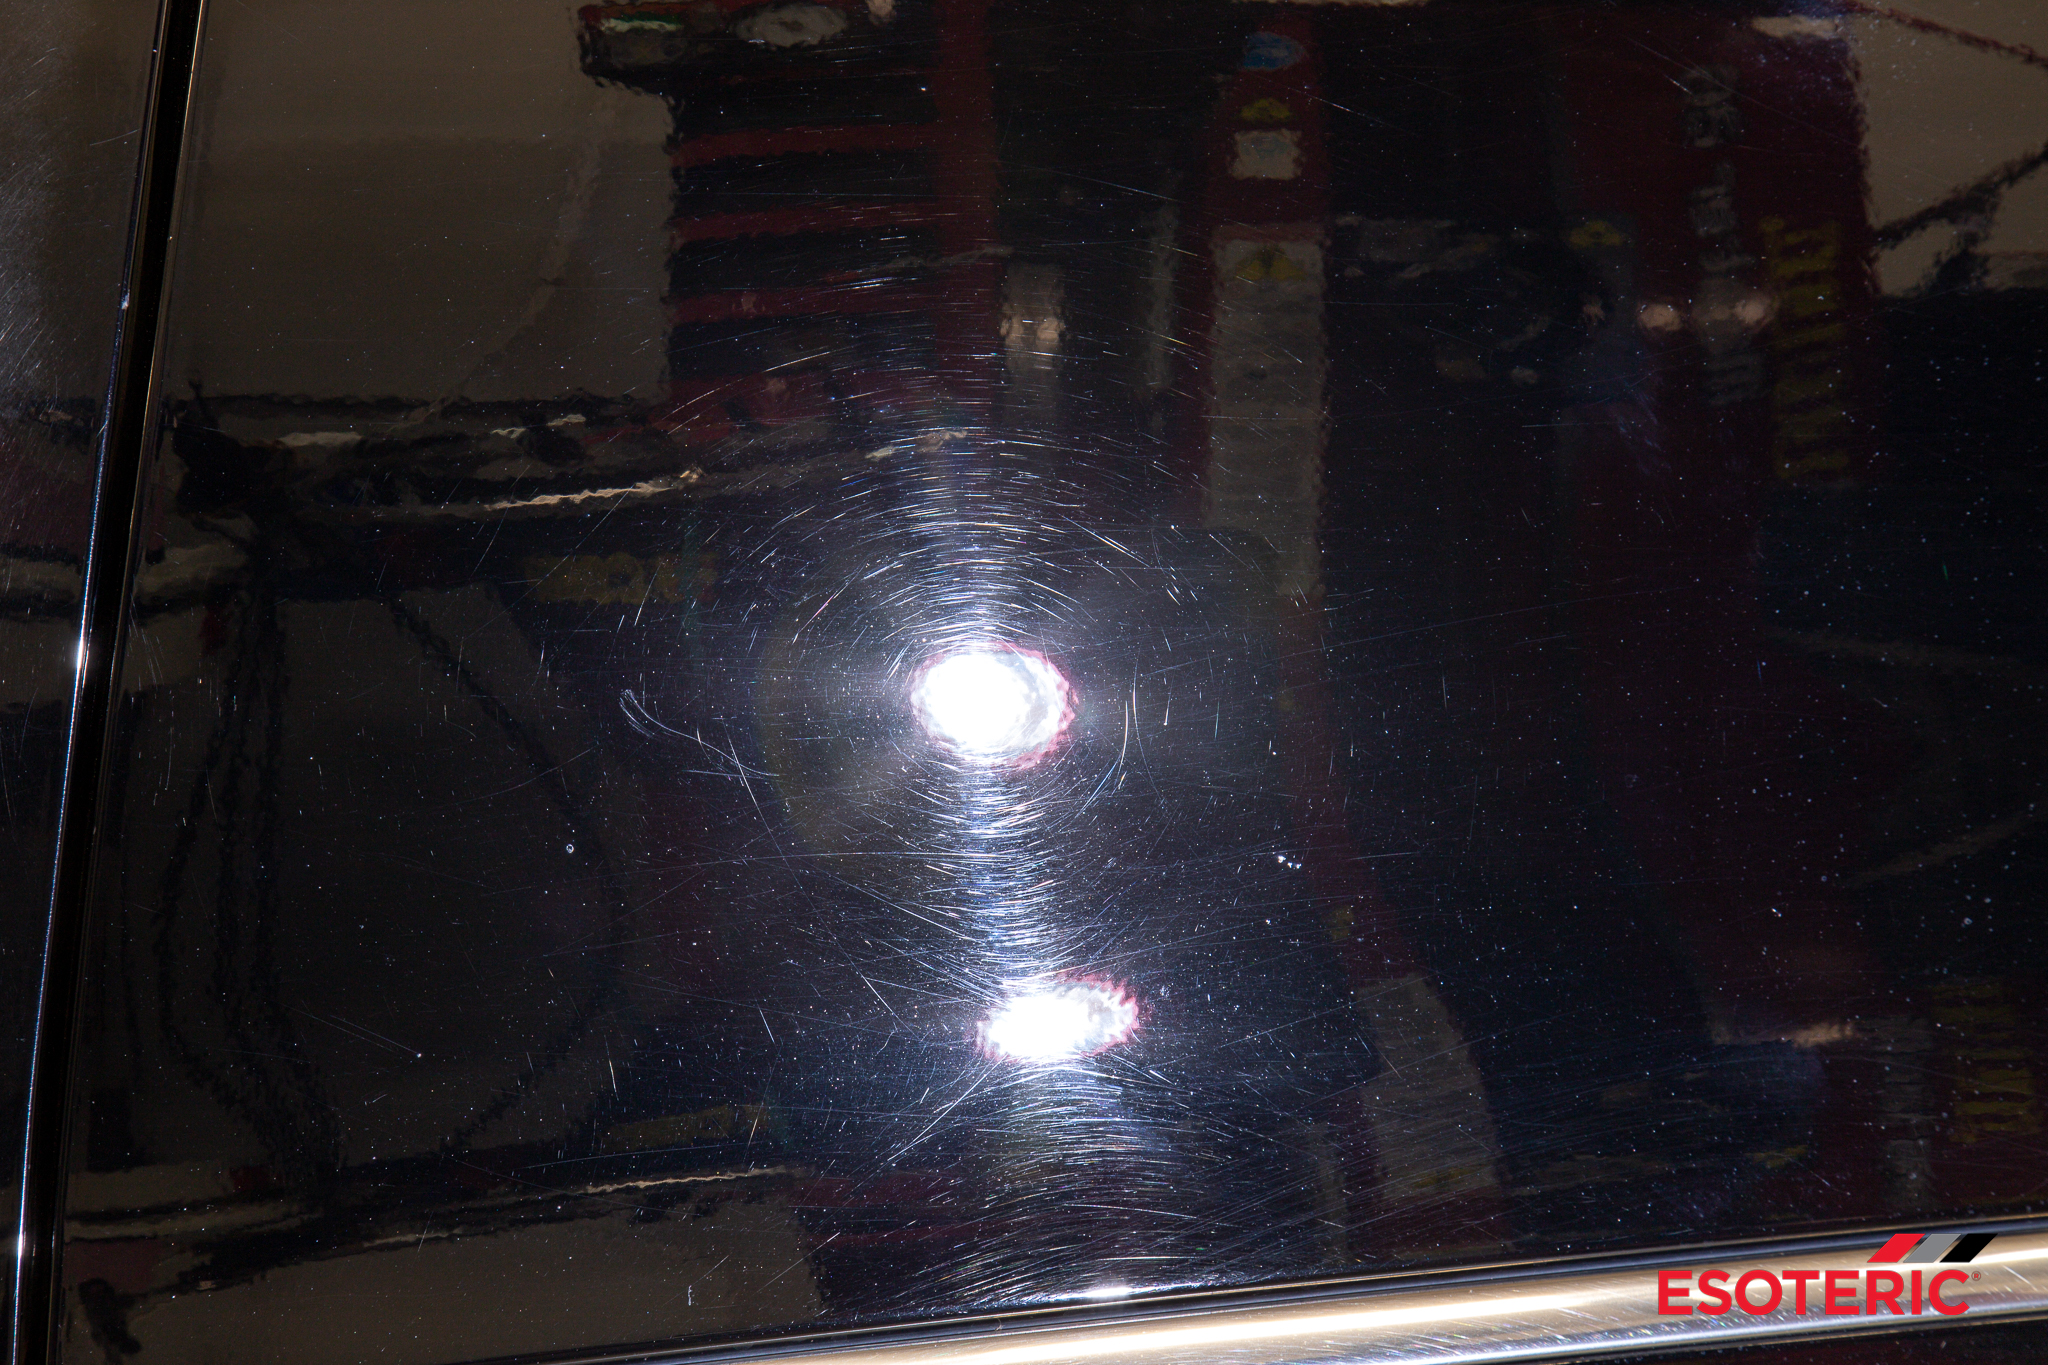 Ozmmyan Sopami Automotive Paint Scratch Wax 150ML, Nanocrystalline Plating  Crystal Polishing Car Accessories Clearance 